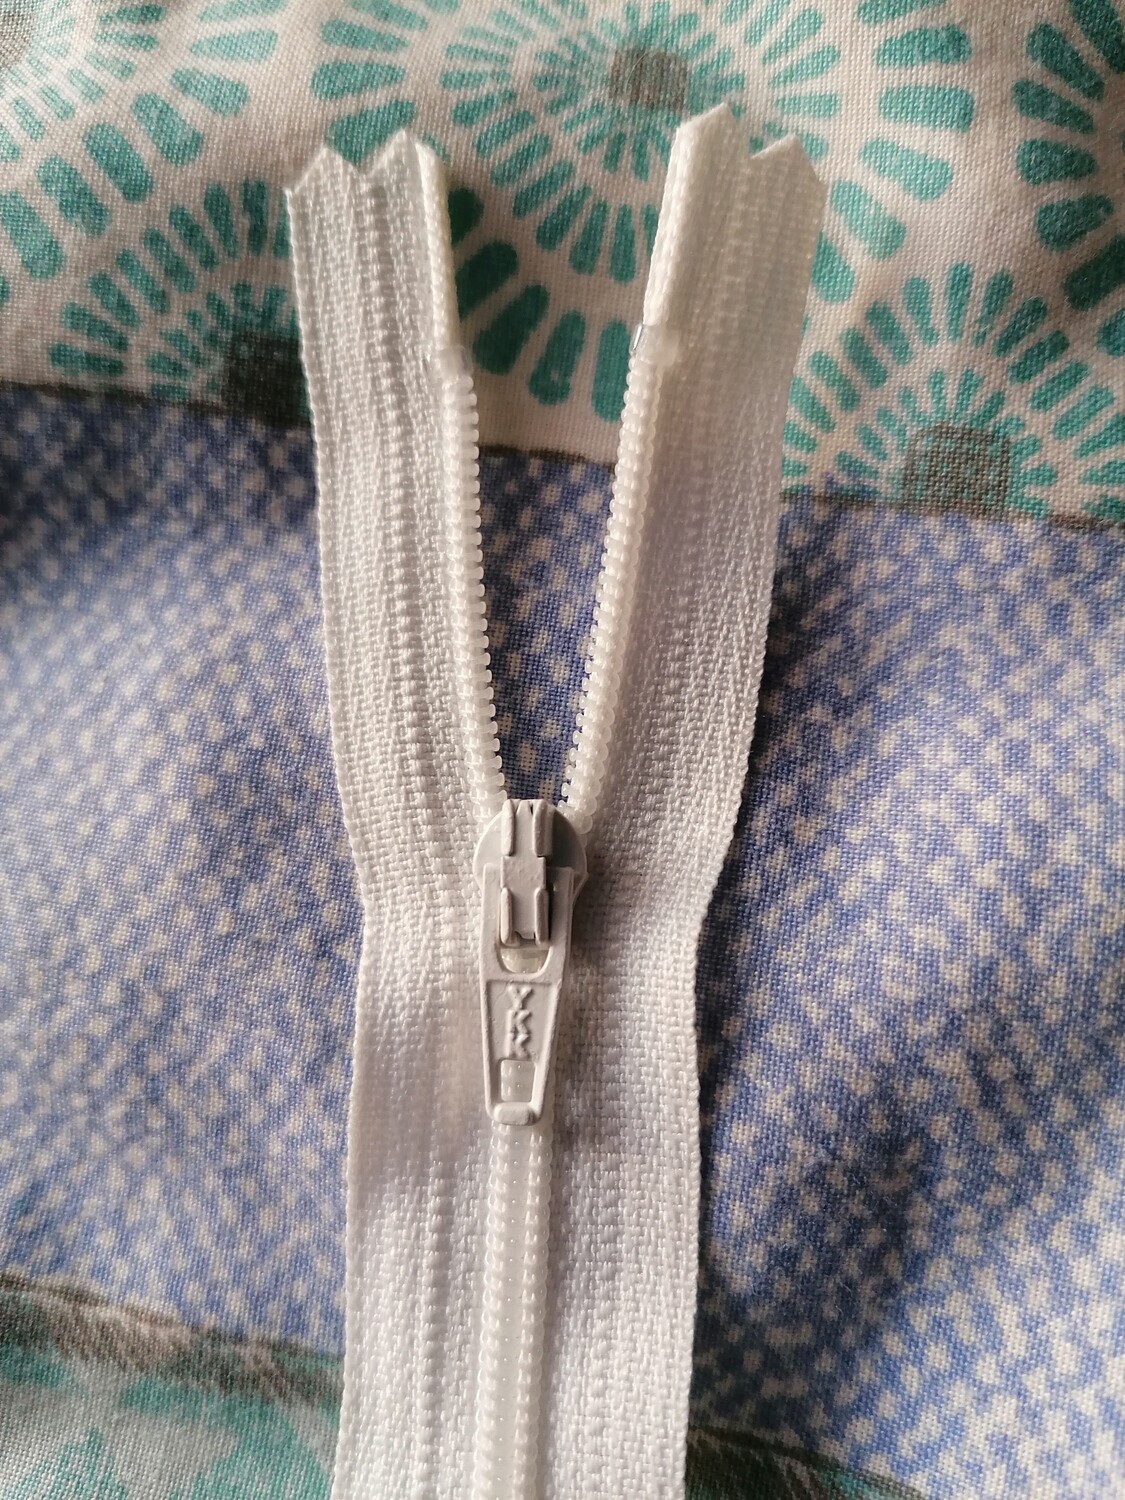 56cm (22") nylon closed end zip